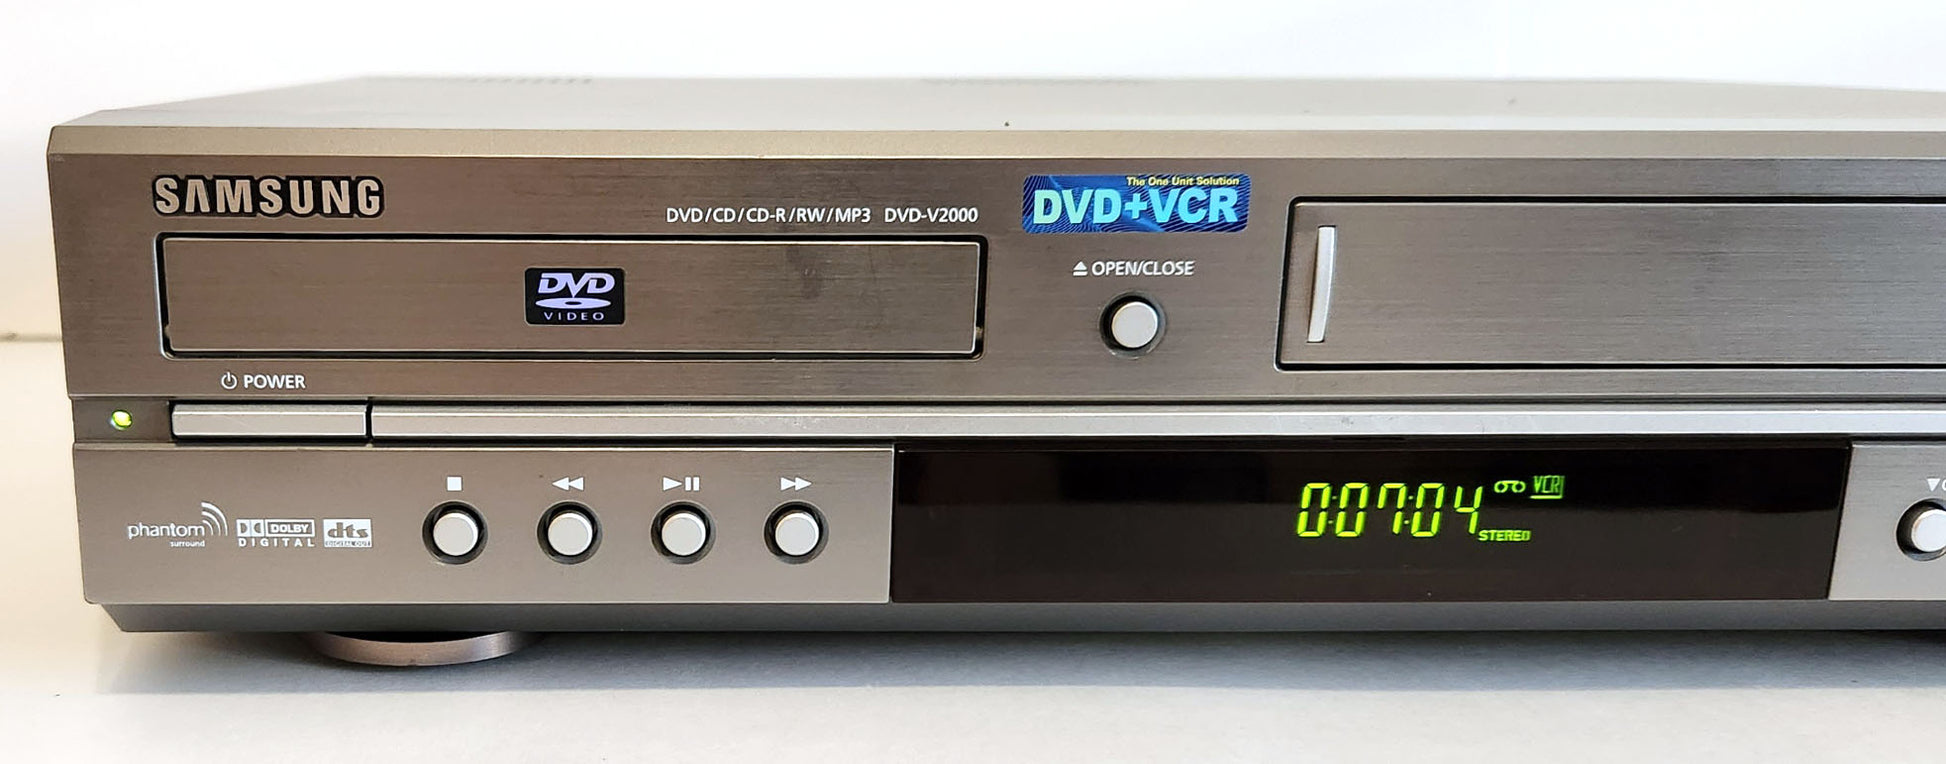 Samsung DVD-V2000 VCR/DVD Player Combo - Left